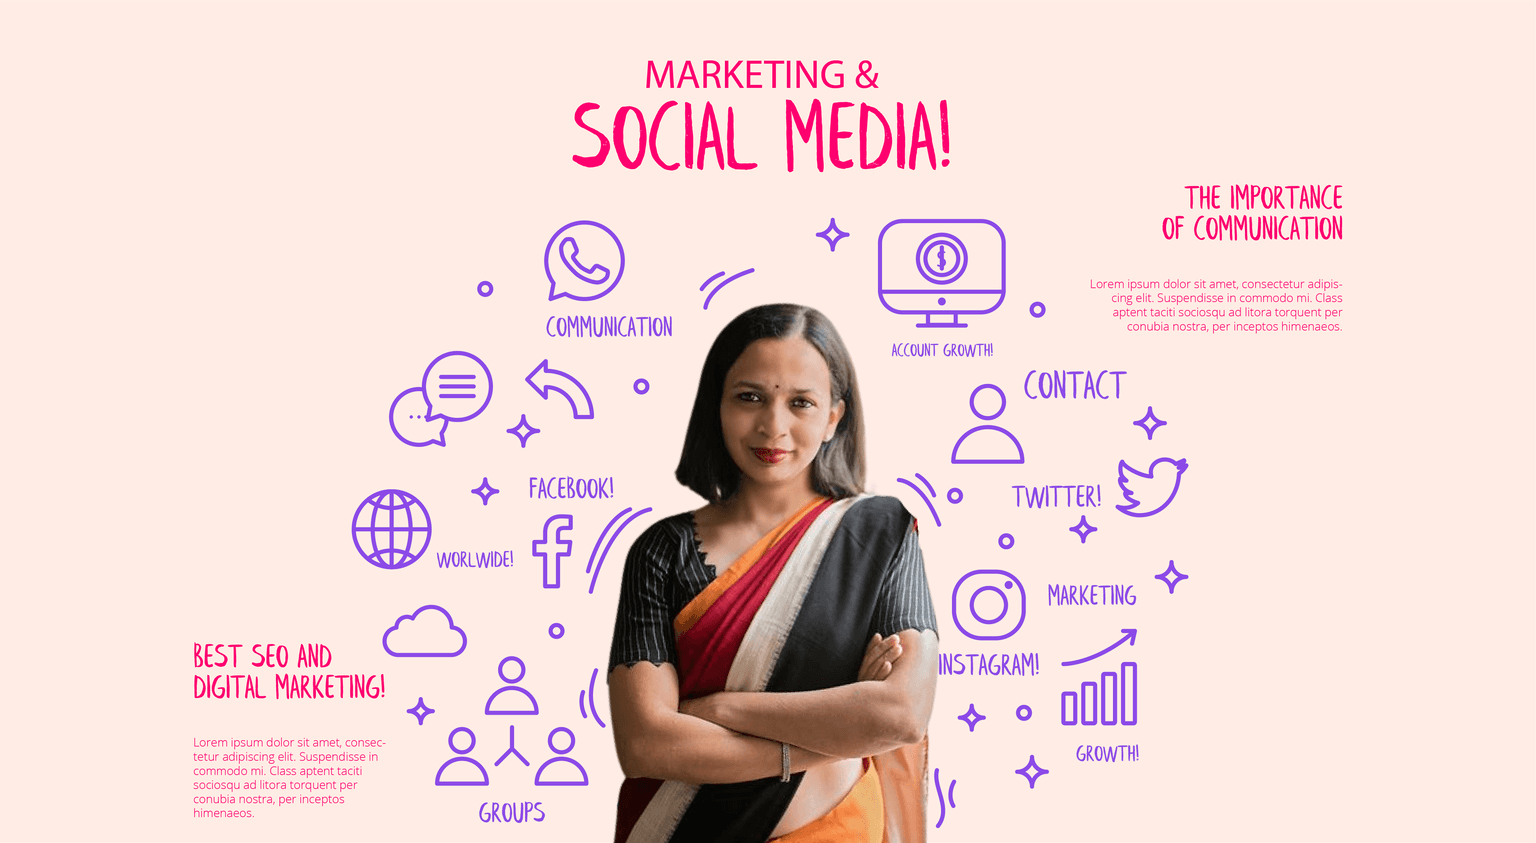 8 Content Marketing Tips from Renowned Nutritionist Rujuta Diwekar’s Social Media